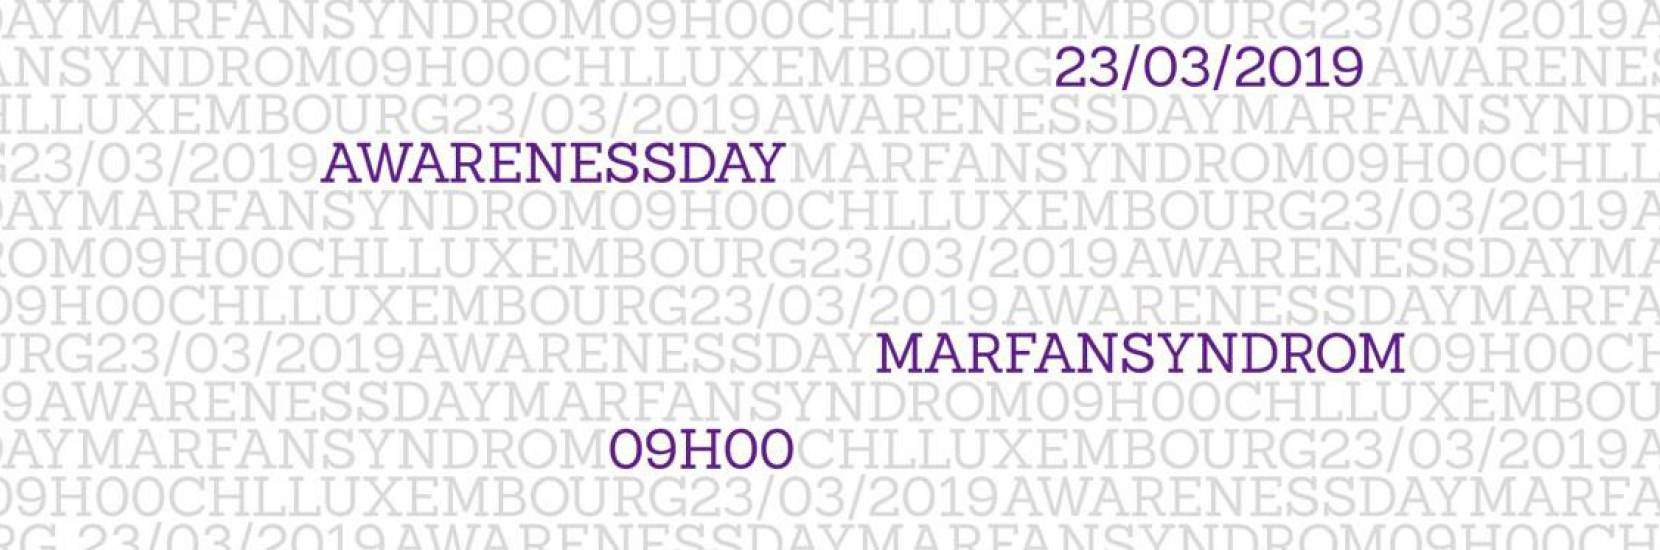  Awarenessday: Marfansyndrom